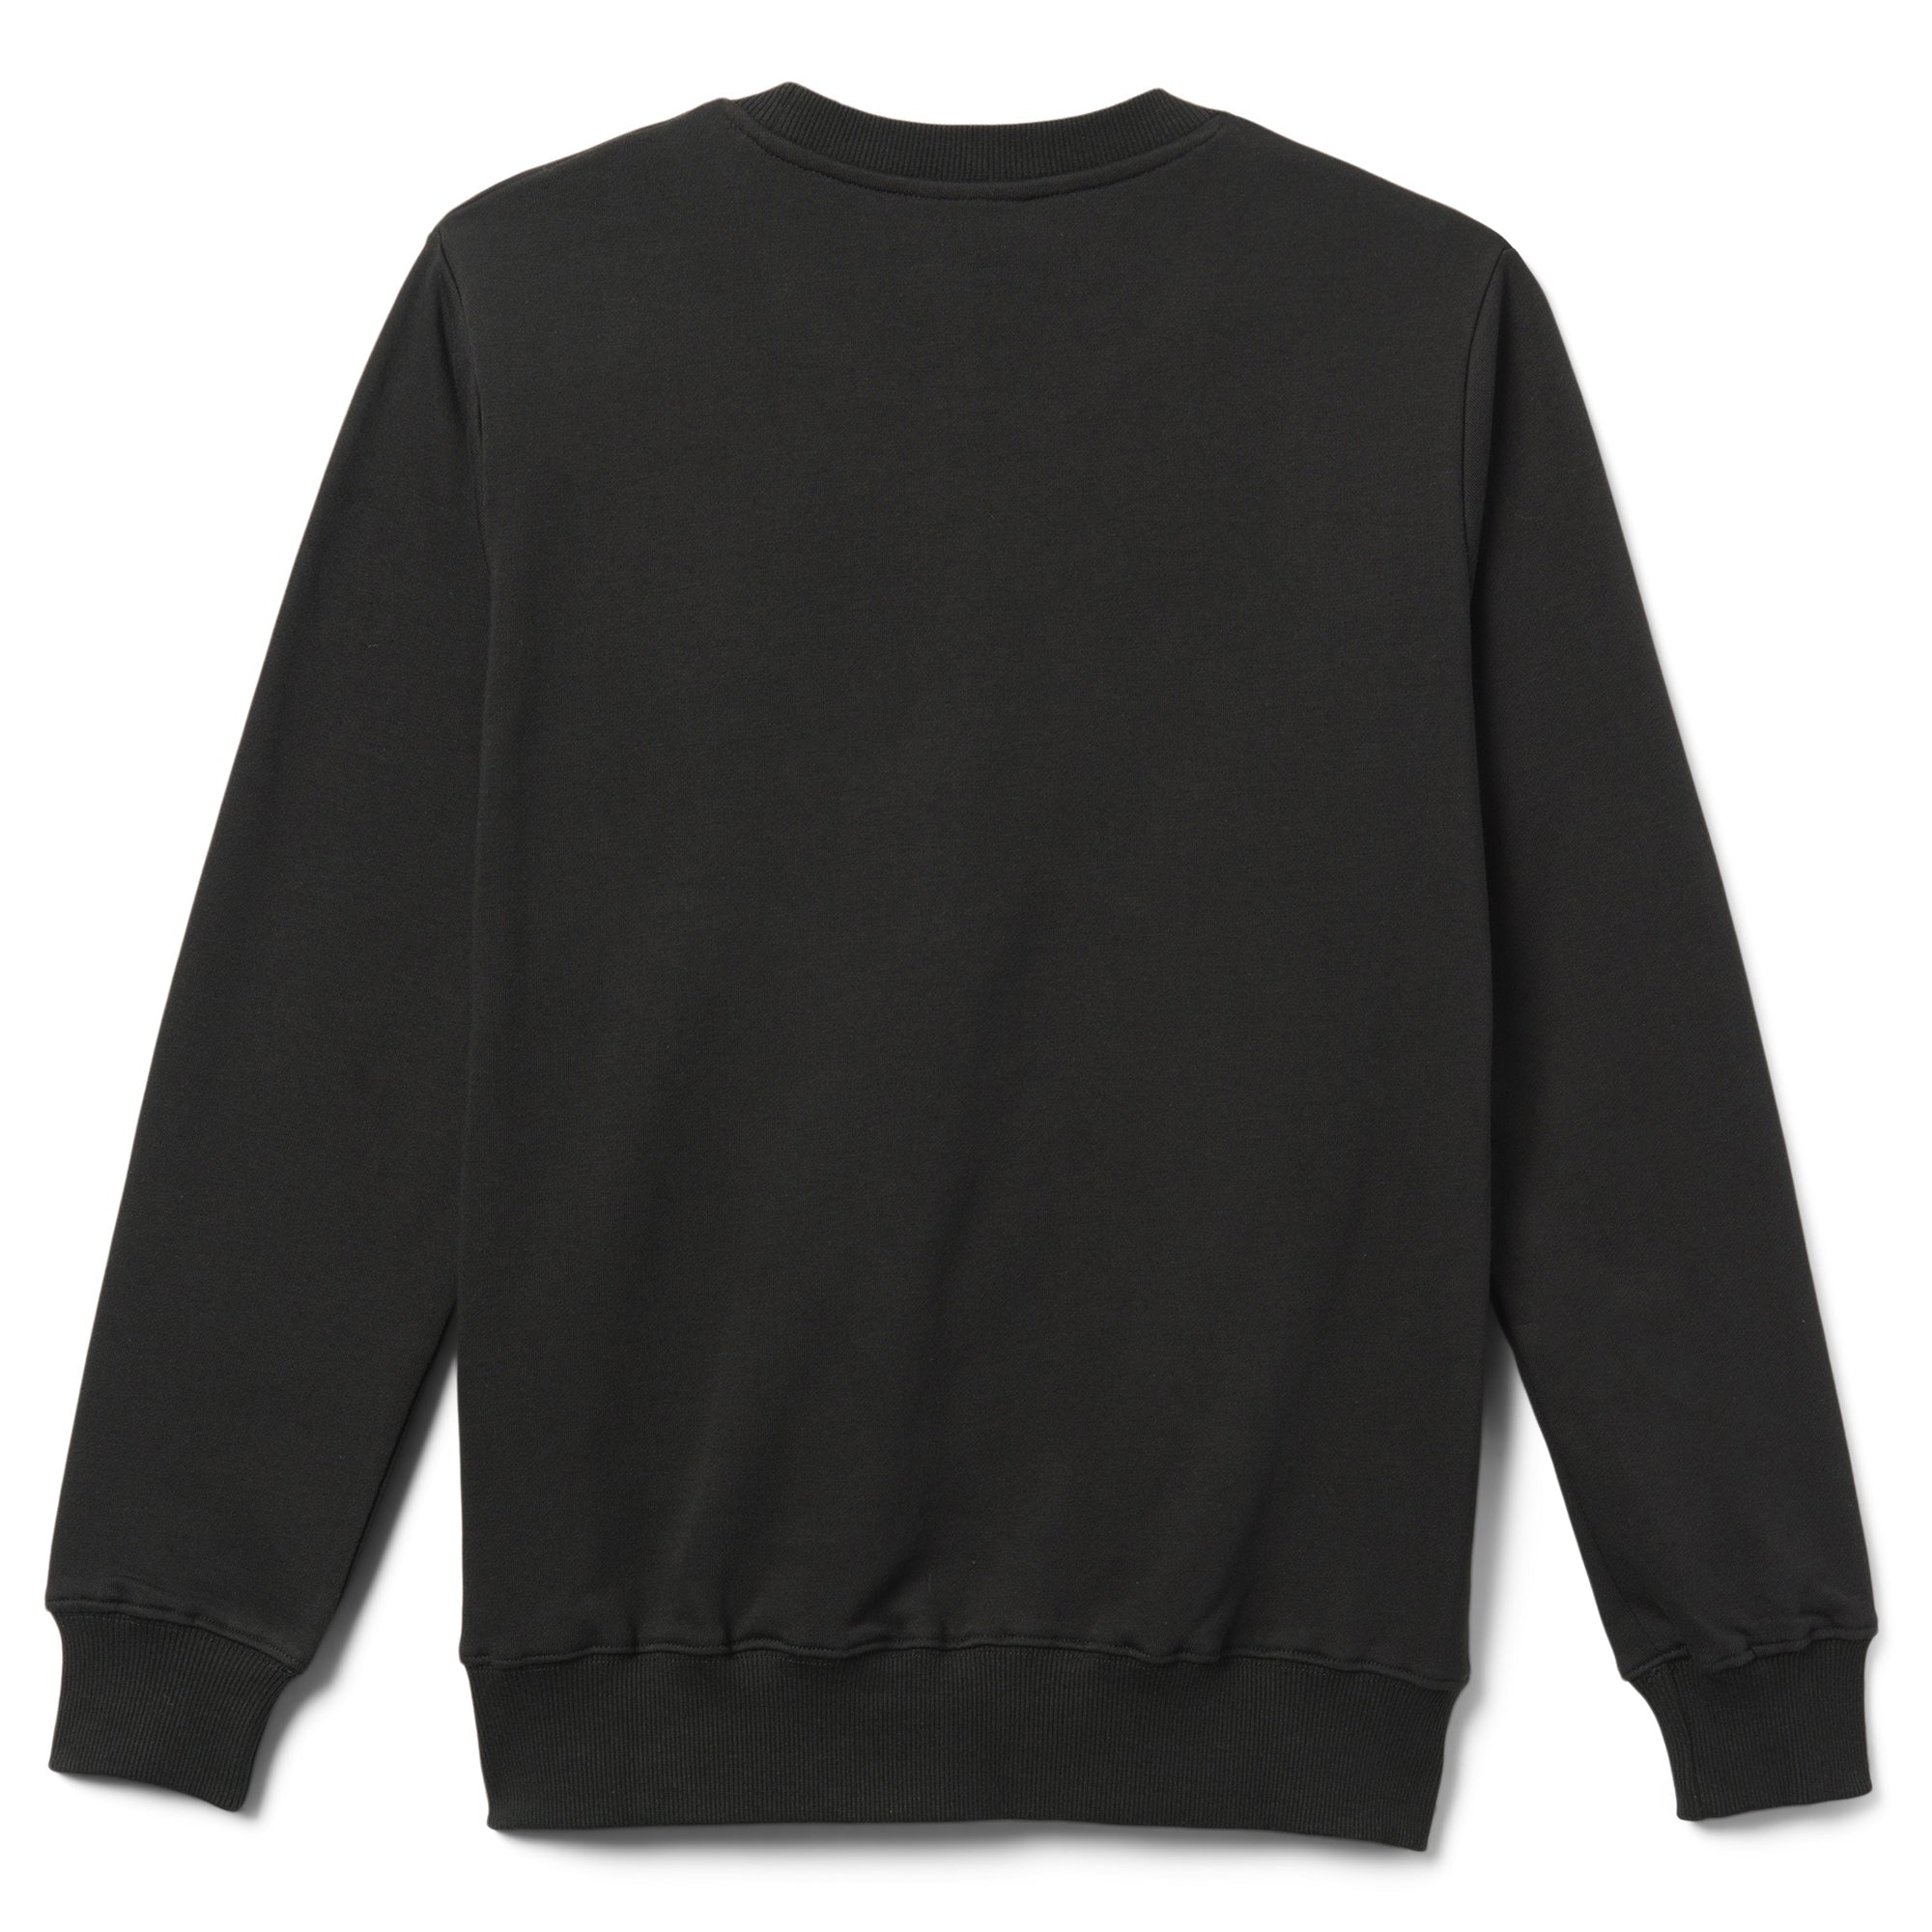 Kuromi Metallic Print Sweatshirt Black Apparel Global License   